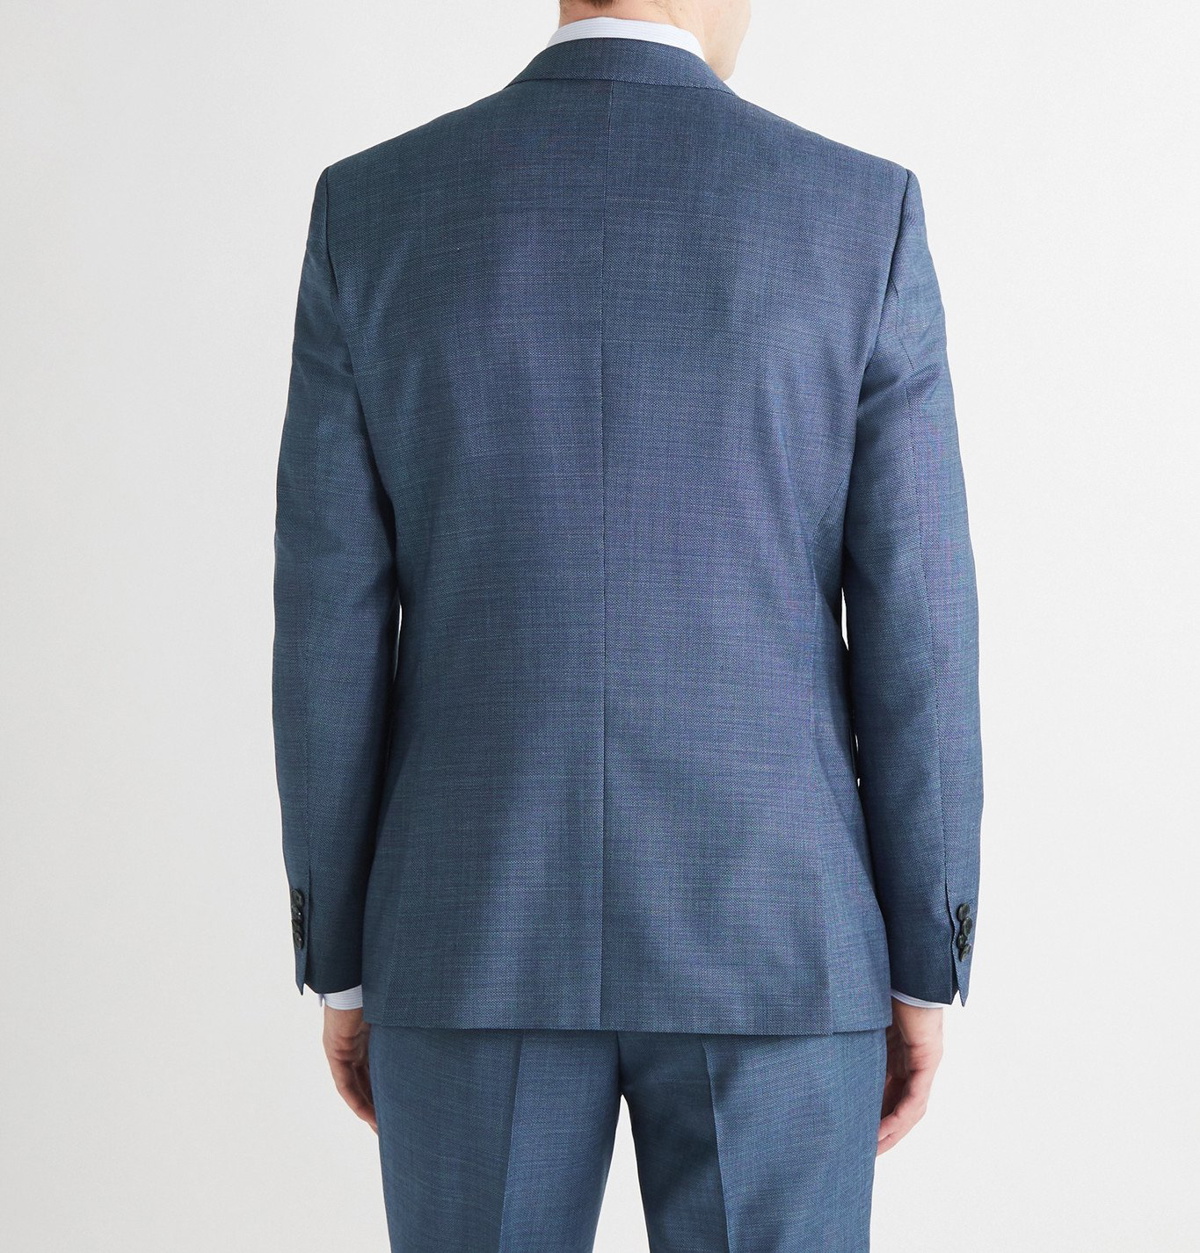 HUGO Arti Birdseye Extra Slim Fit Suit Separates